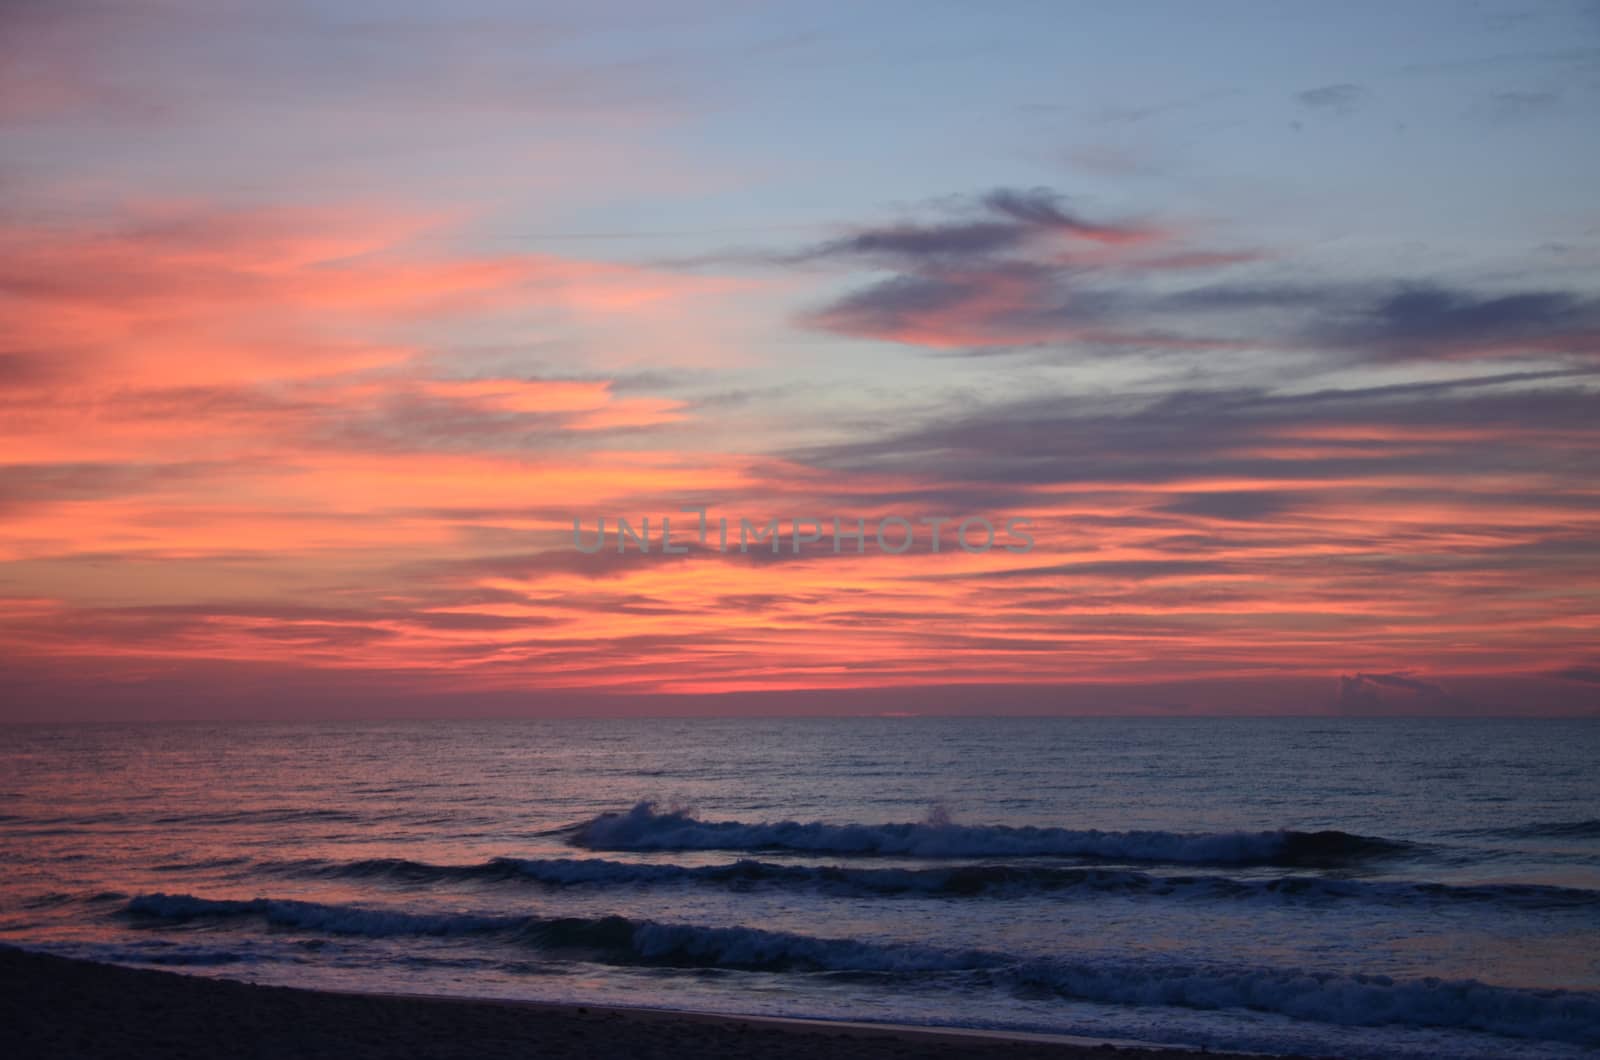 Ocean Morning by northwoodsphoto